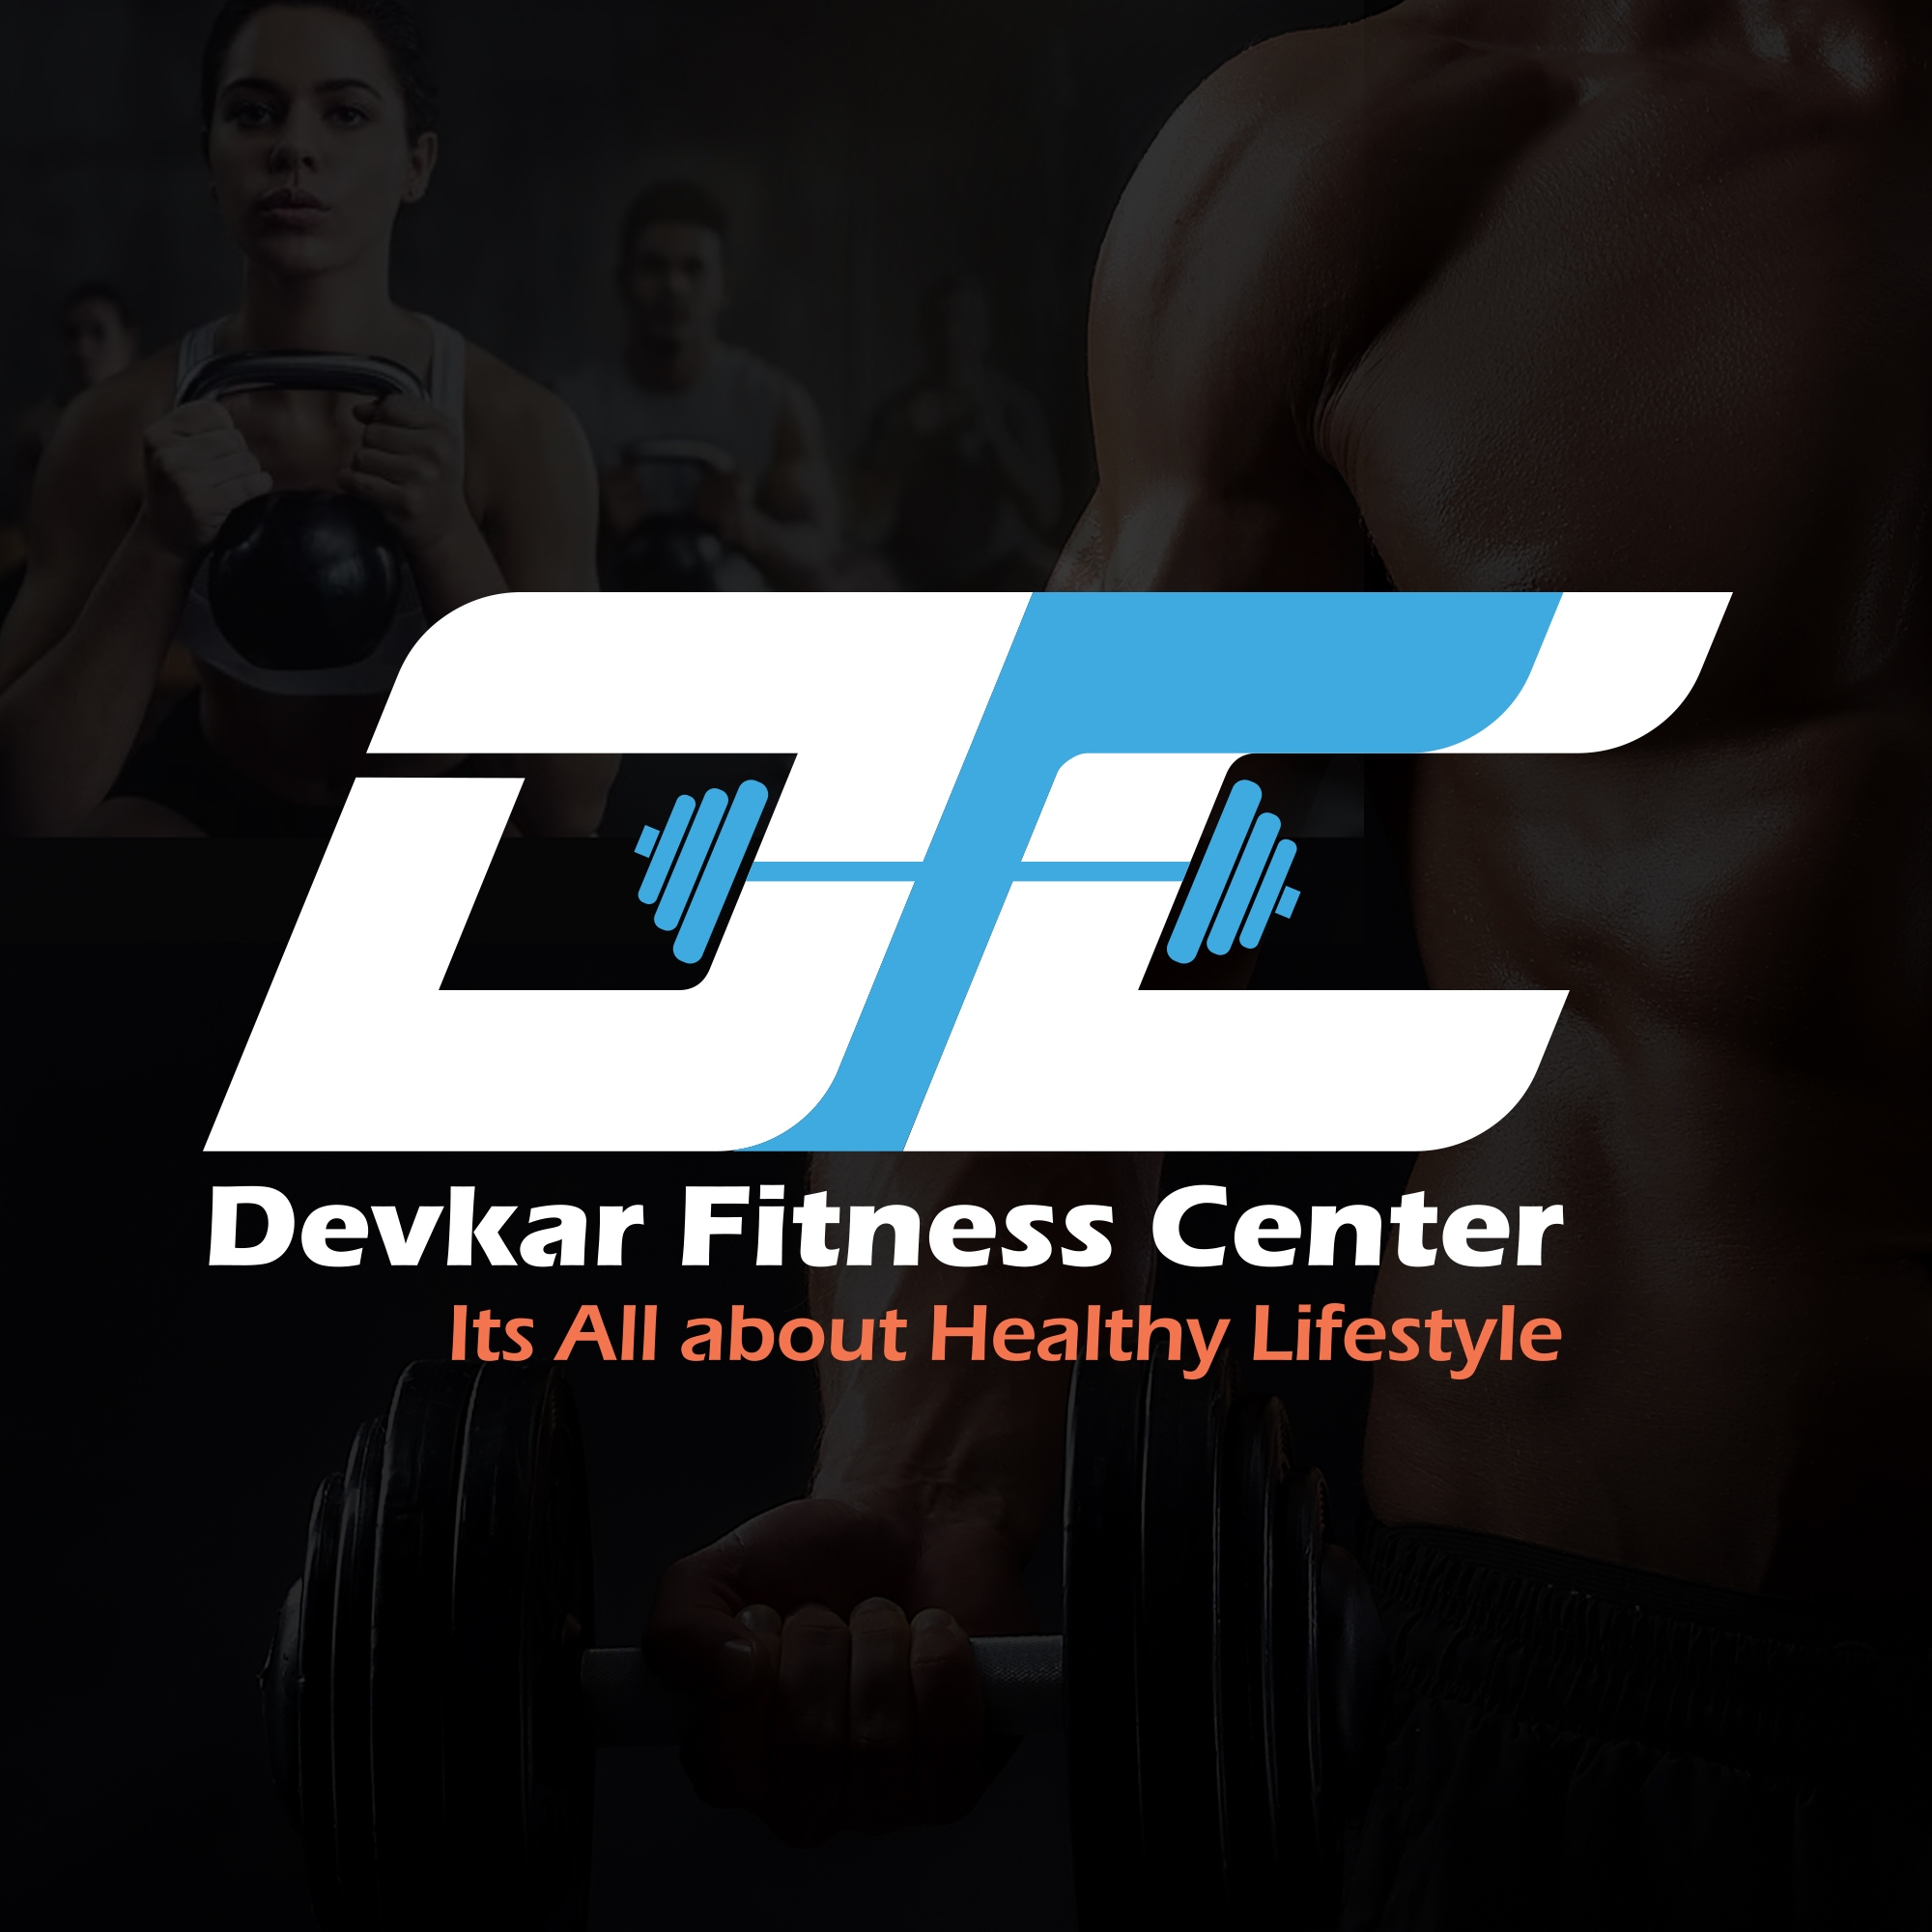 Devkar Fitness Center|Gym and Fitness Centre|Active Life